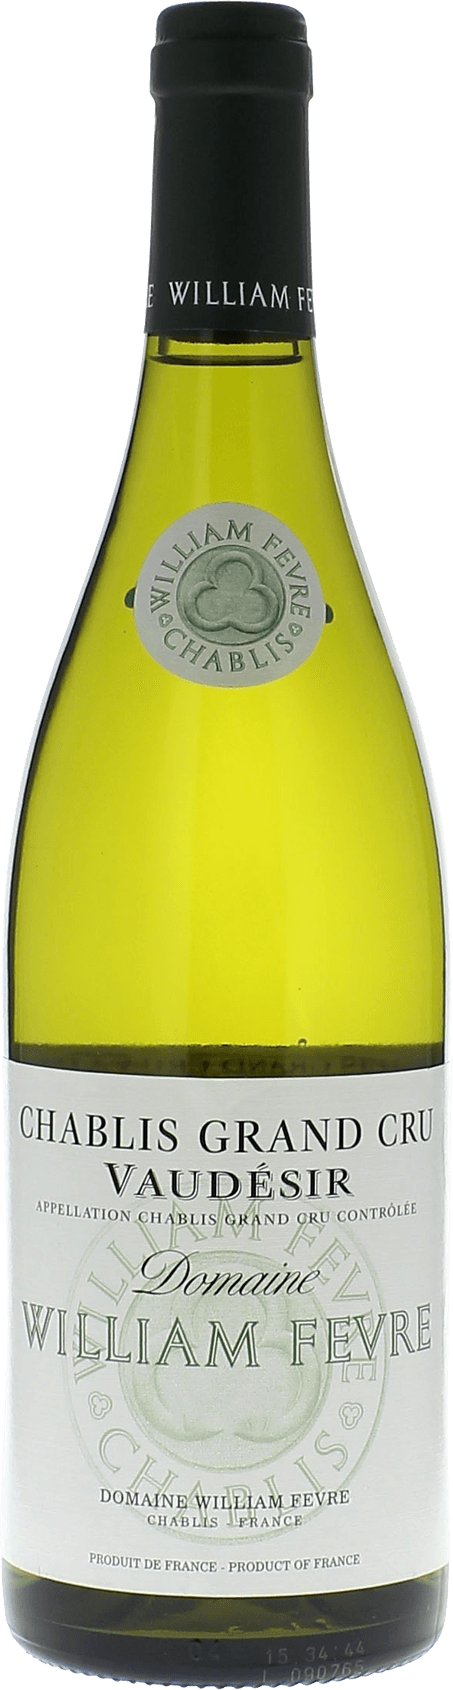 Chablis grand cru vaudsir 2018  FEVRE William, Bourgogne blanc